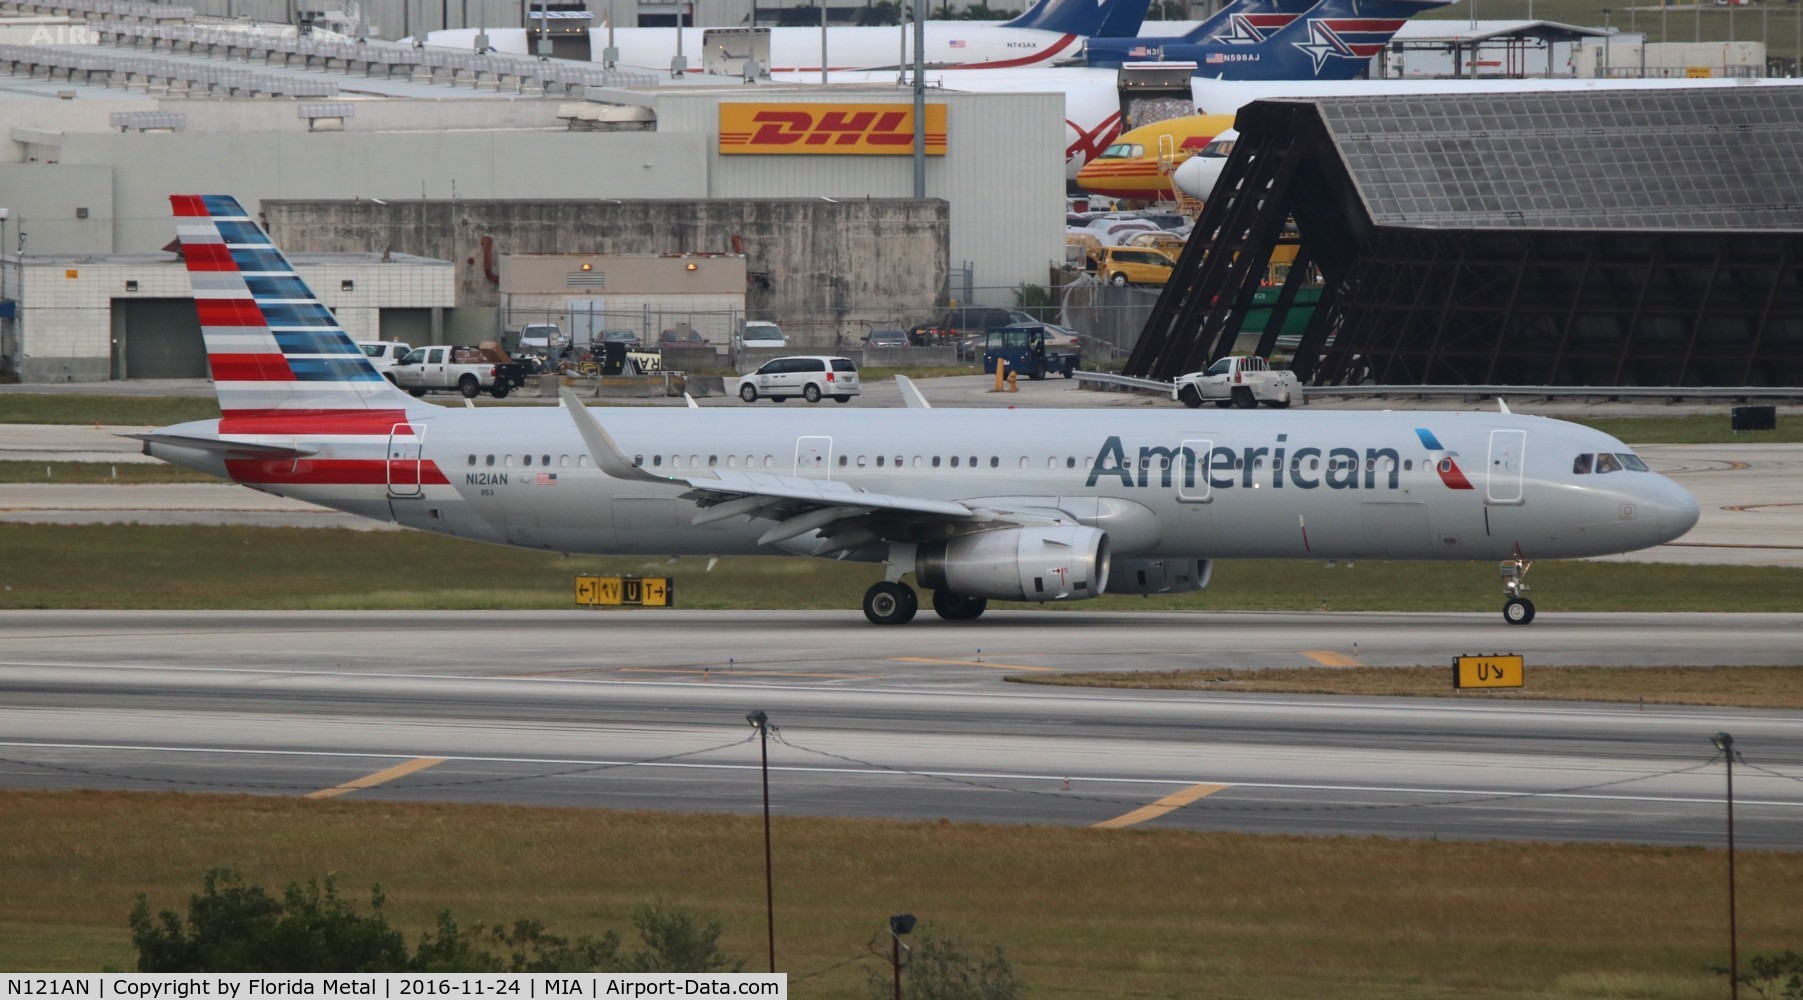 N121AN, 2014 Airbus A321-231 C/N 6238, American